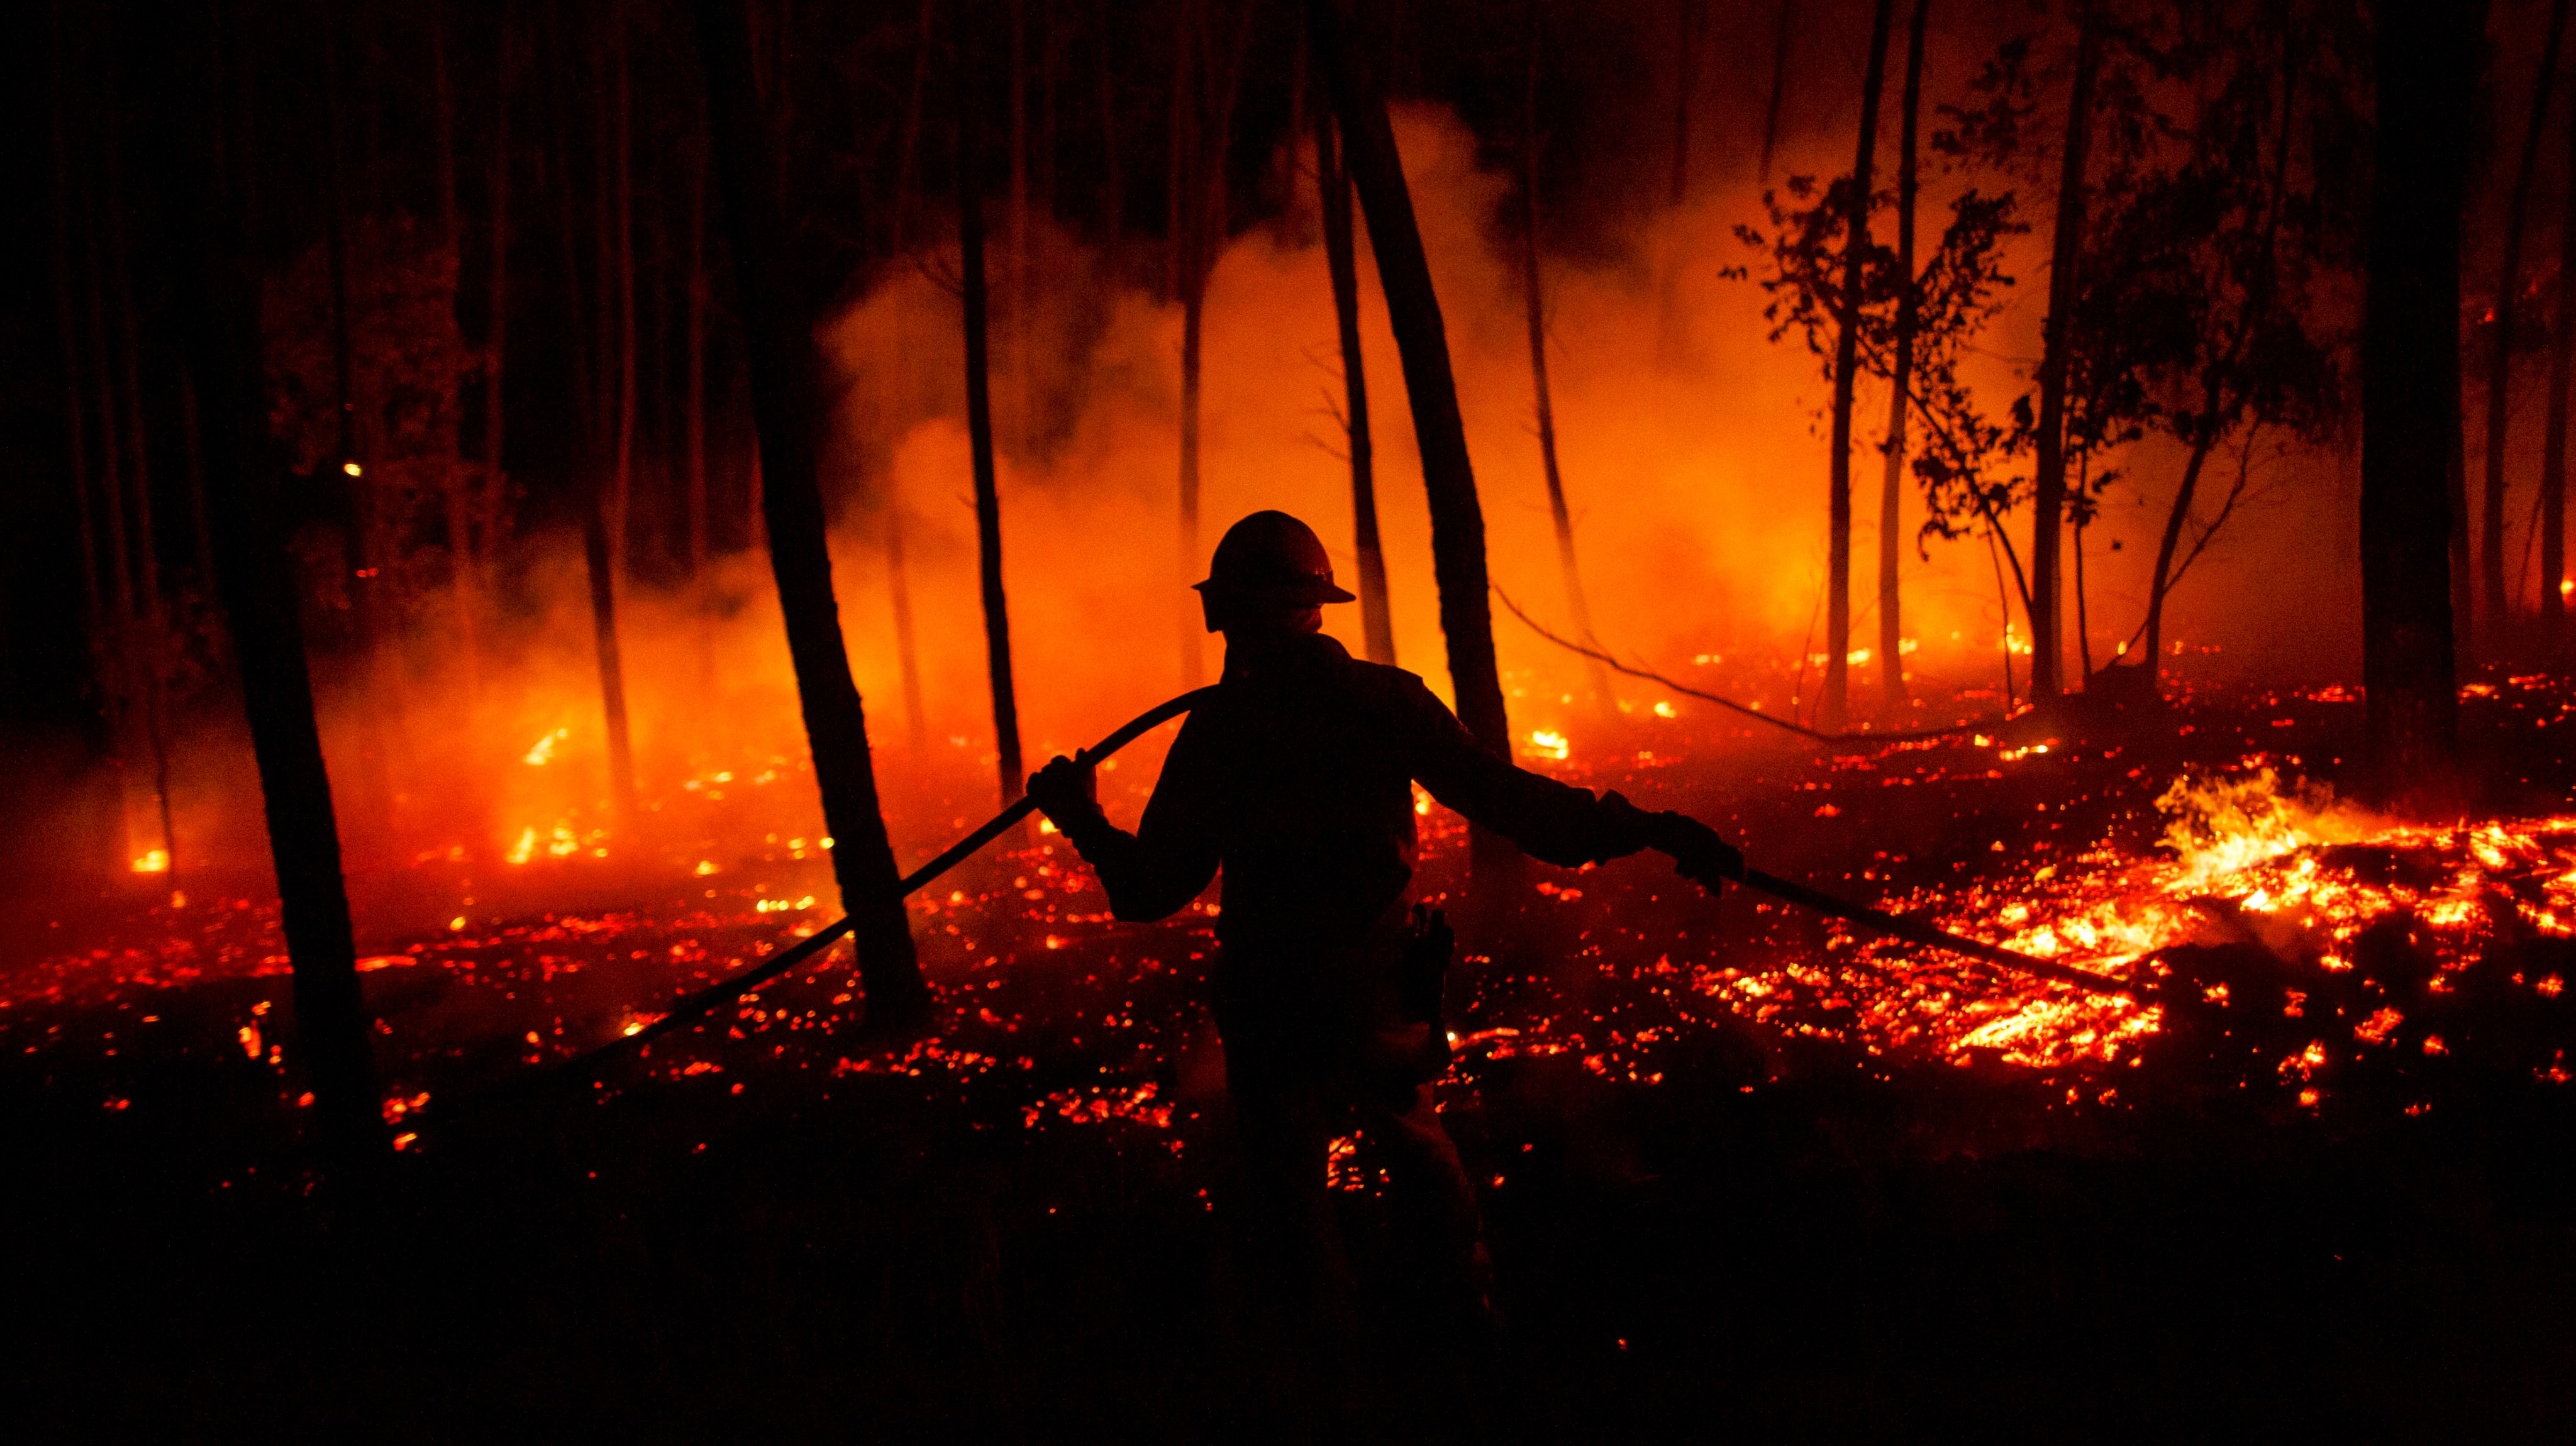 Dozens Dead In Forest Fire In Portugal